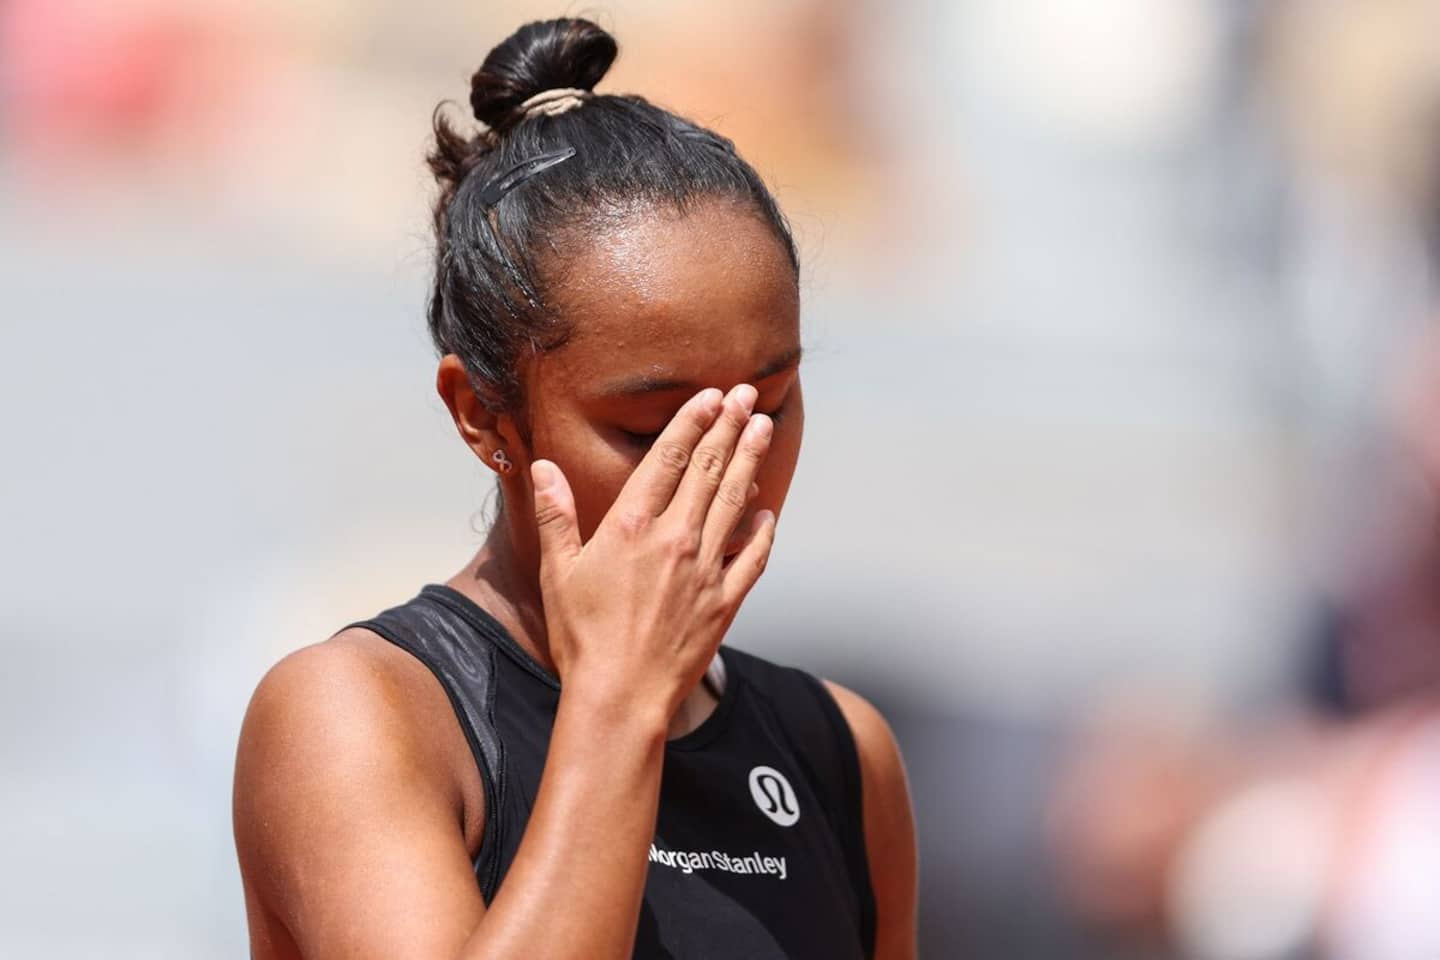 It's over for Leylah Annie Fernandez at Roland-Garros